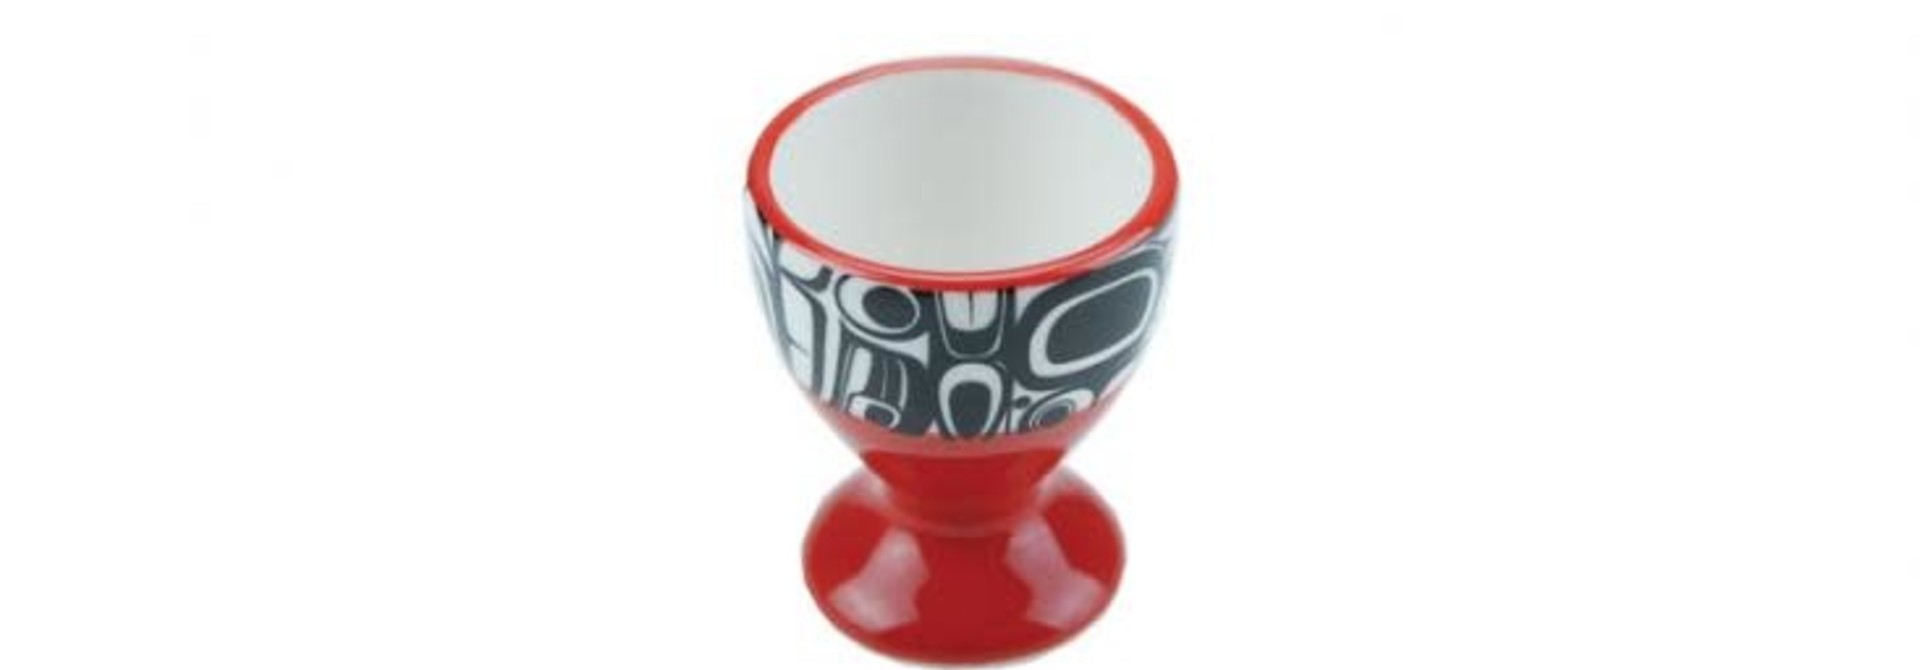 Ceramic Egg Cup raven Design -Kelly Robinson